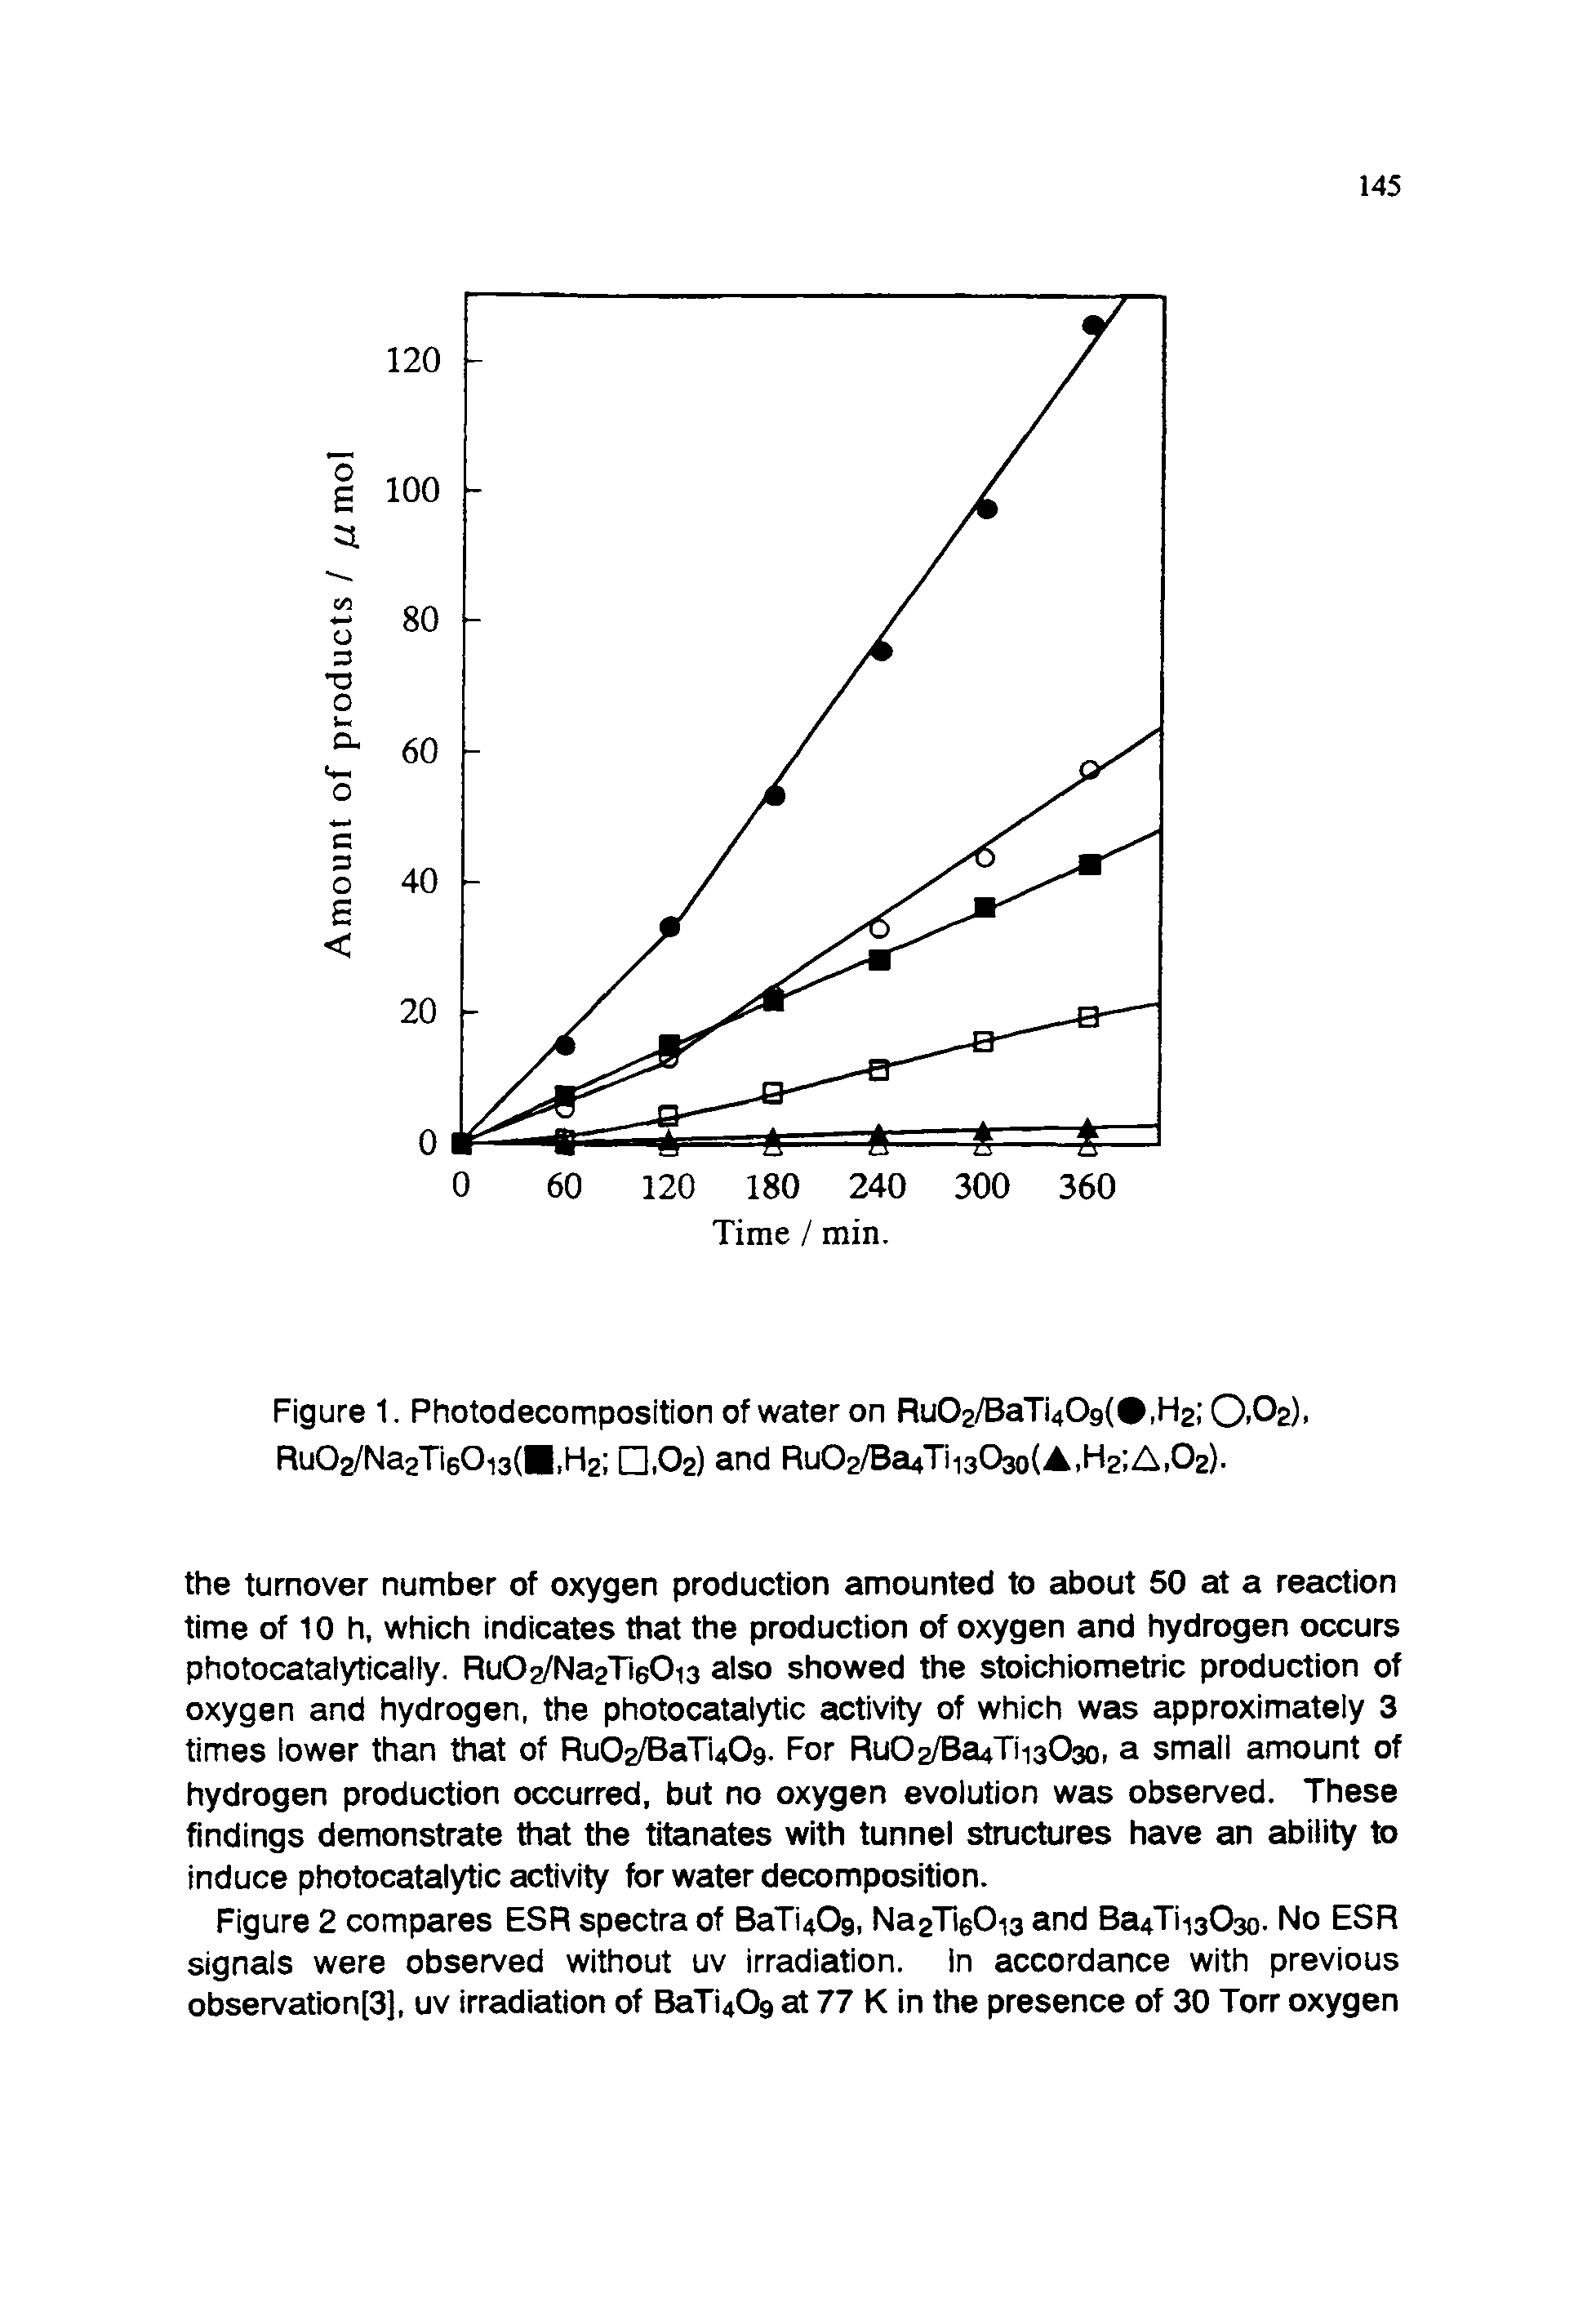 Figure 1. Photodecomposition of water on Ru02/BaTi40g(, H2 O-Os), Ru02/Na2Ti60i3(H,H2 .O2) and Ru02/Ba4Tii303o(A,H2 A,02).